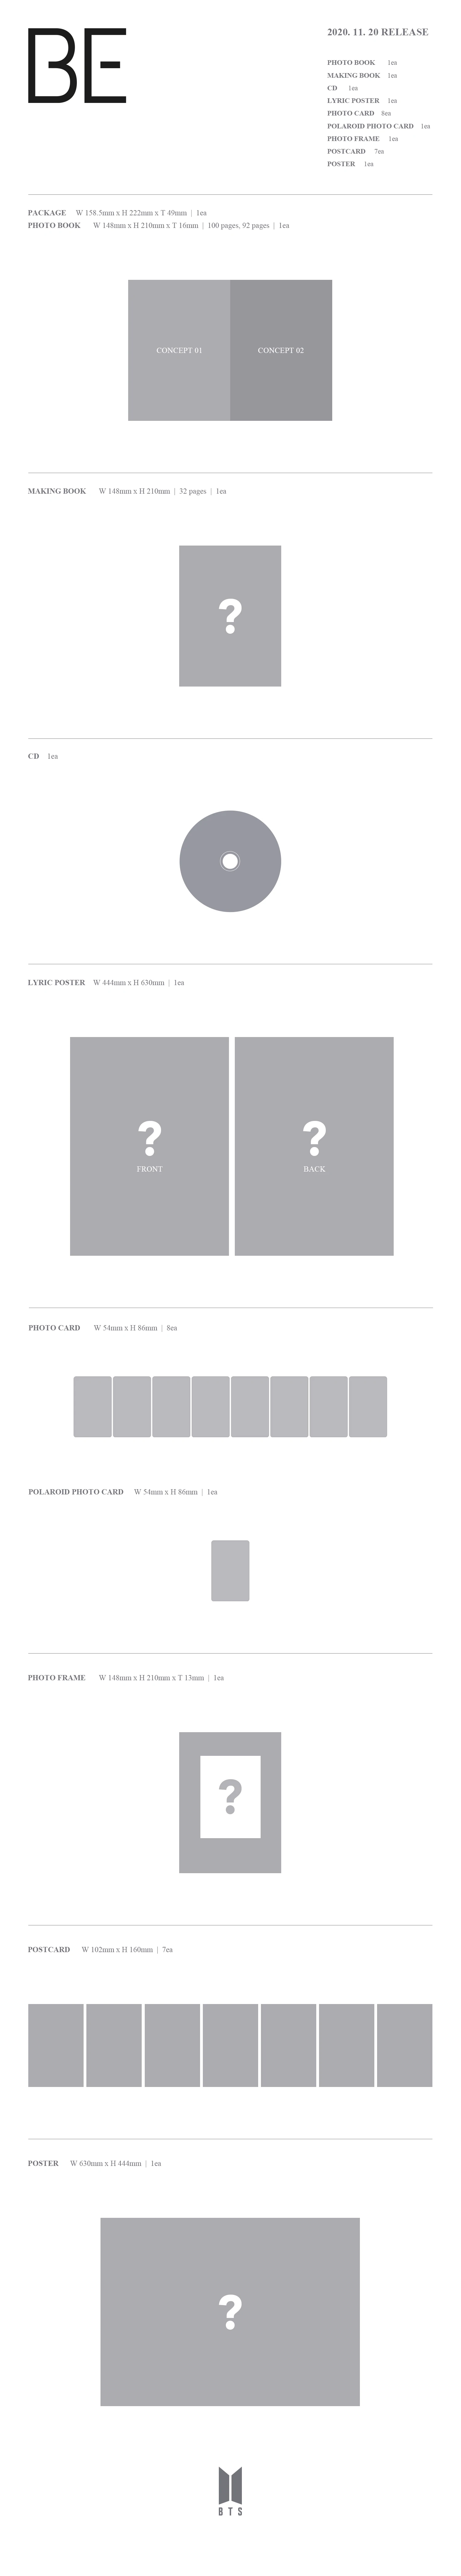 [Official Kpop]BTS album- BE (Deluxe Edition) Pre-order Wholesale